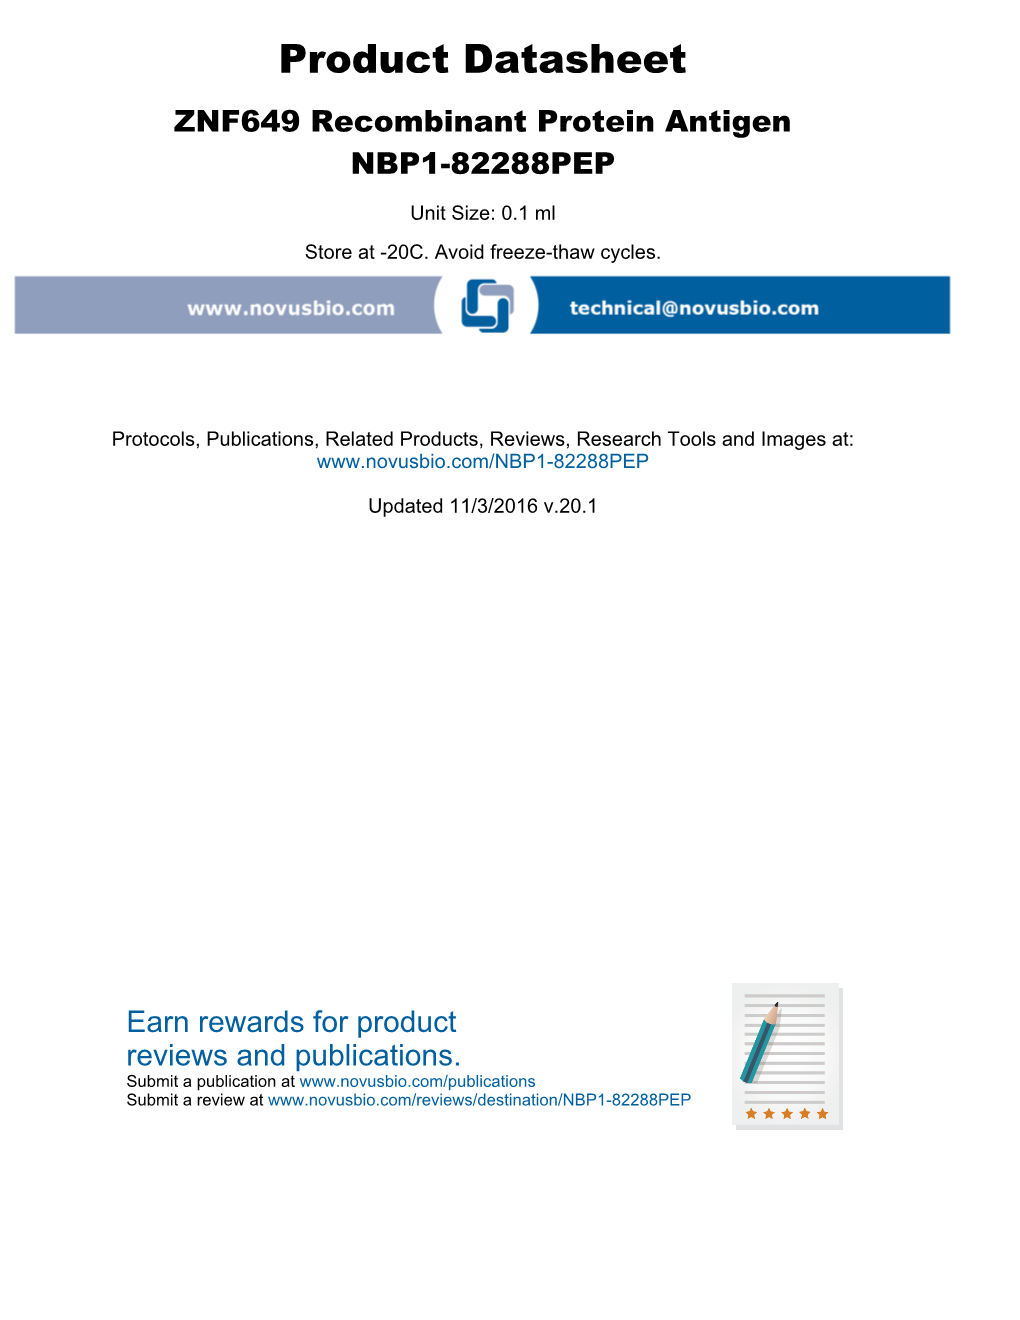 Product Datasheet ZNF649 Recombinant Protein Antigen NBP1